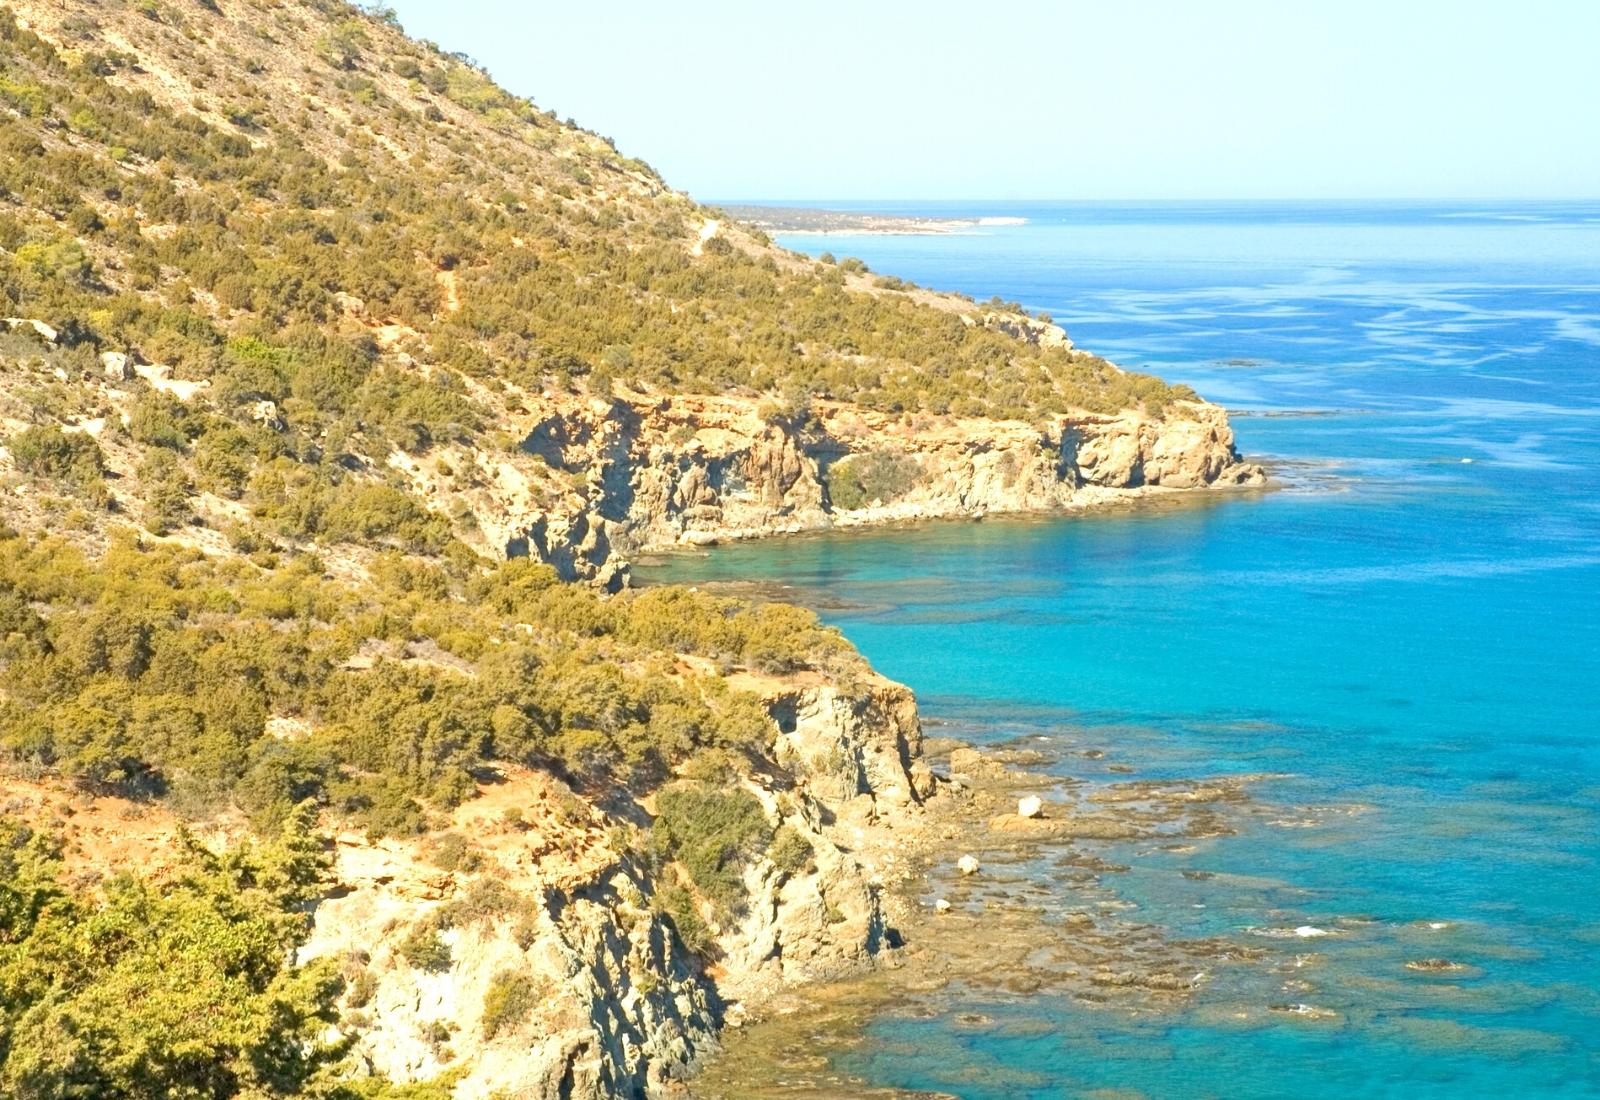 Cyprus Smigies Trail